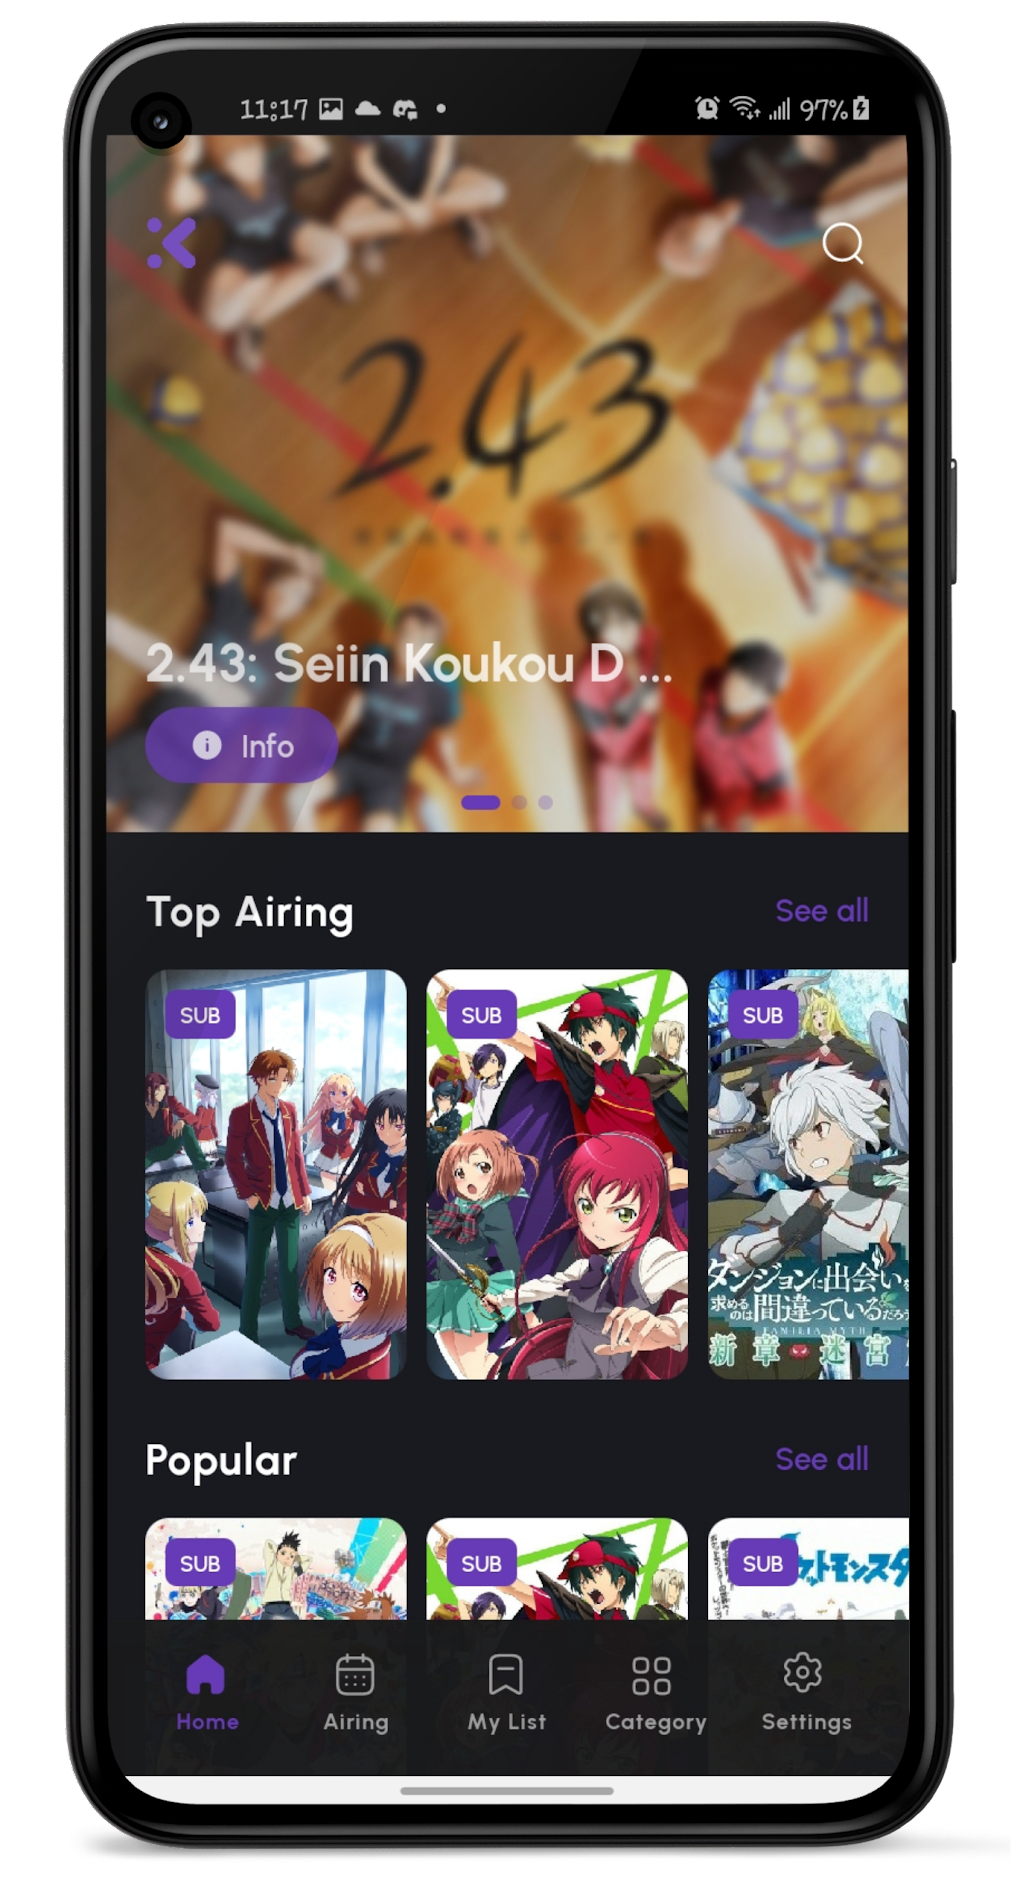 Best Android App To Watch Anime Online GET 59 OFF islandcrematoriumie